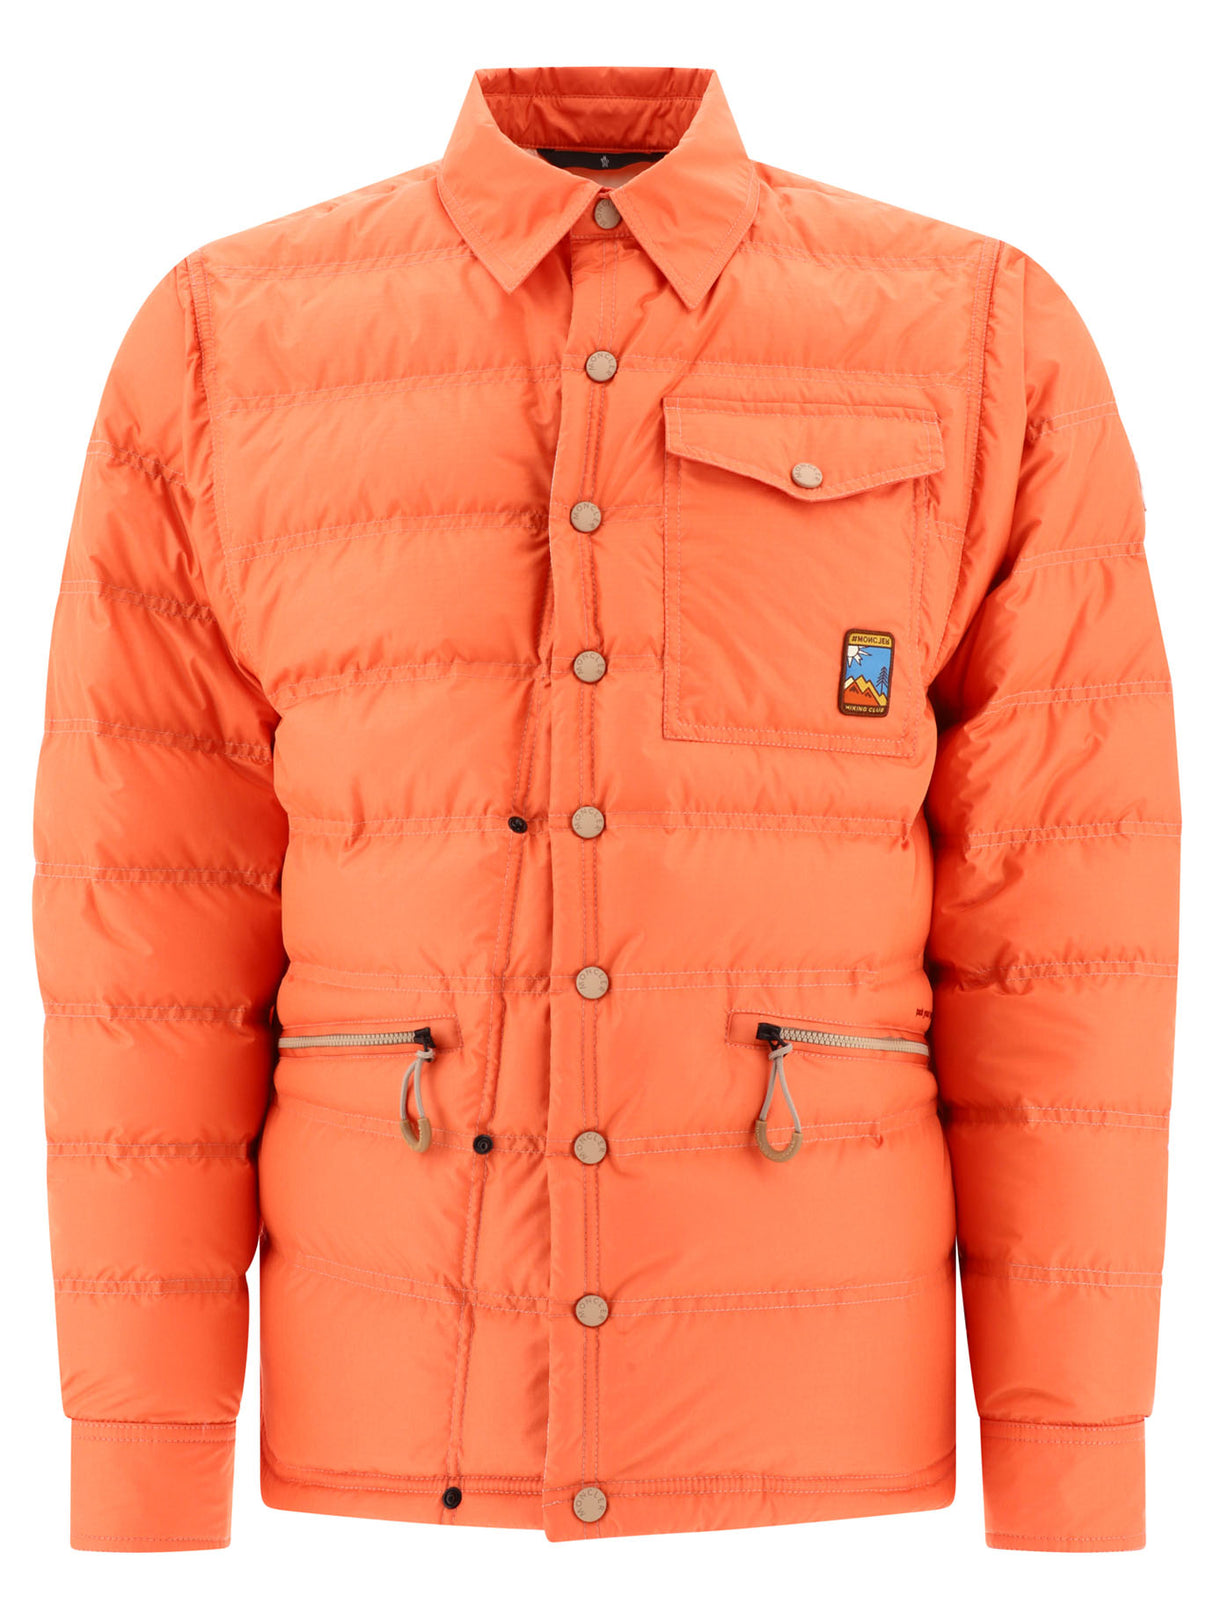 MONCLER GRENOBLE Men's Orange Down Jacket: Regular Fit with Logo Patch